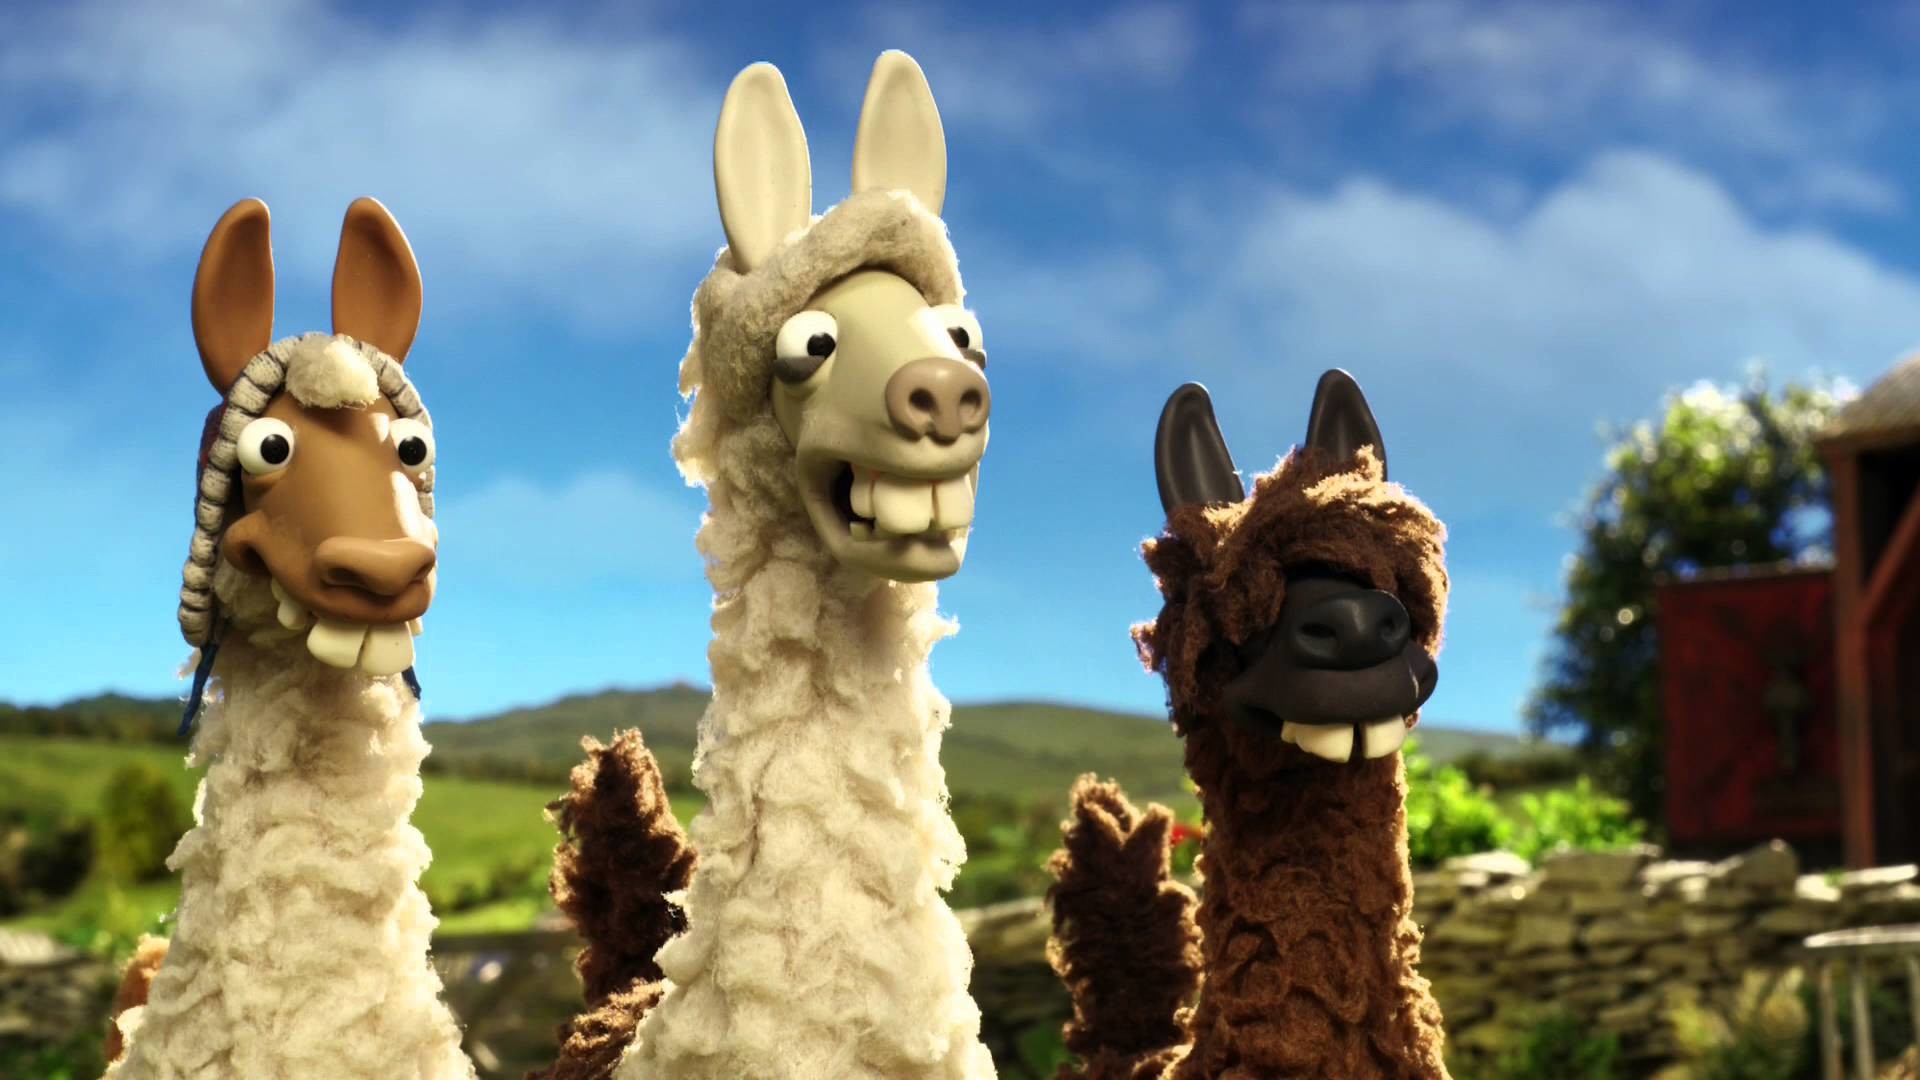 1920x1080 The llamas join Shaun the sheep on the farm - The Farmer's Llamas: Preview  - BBC One Christmas 2015 - YouTube